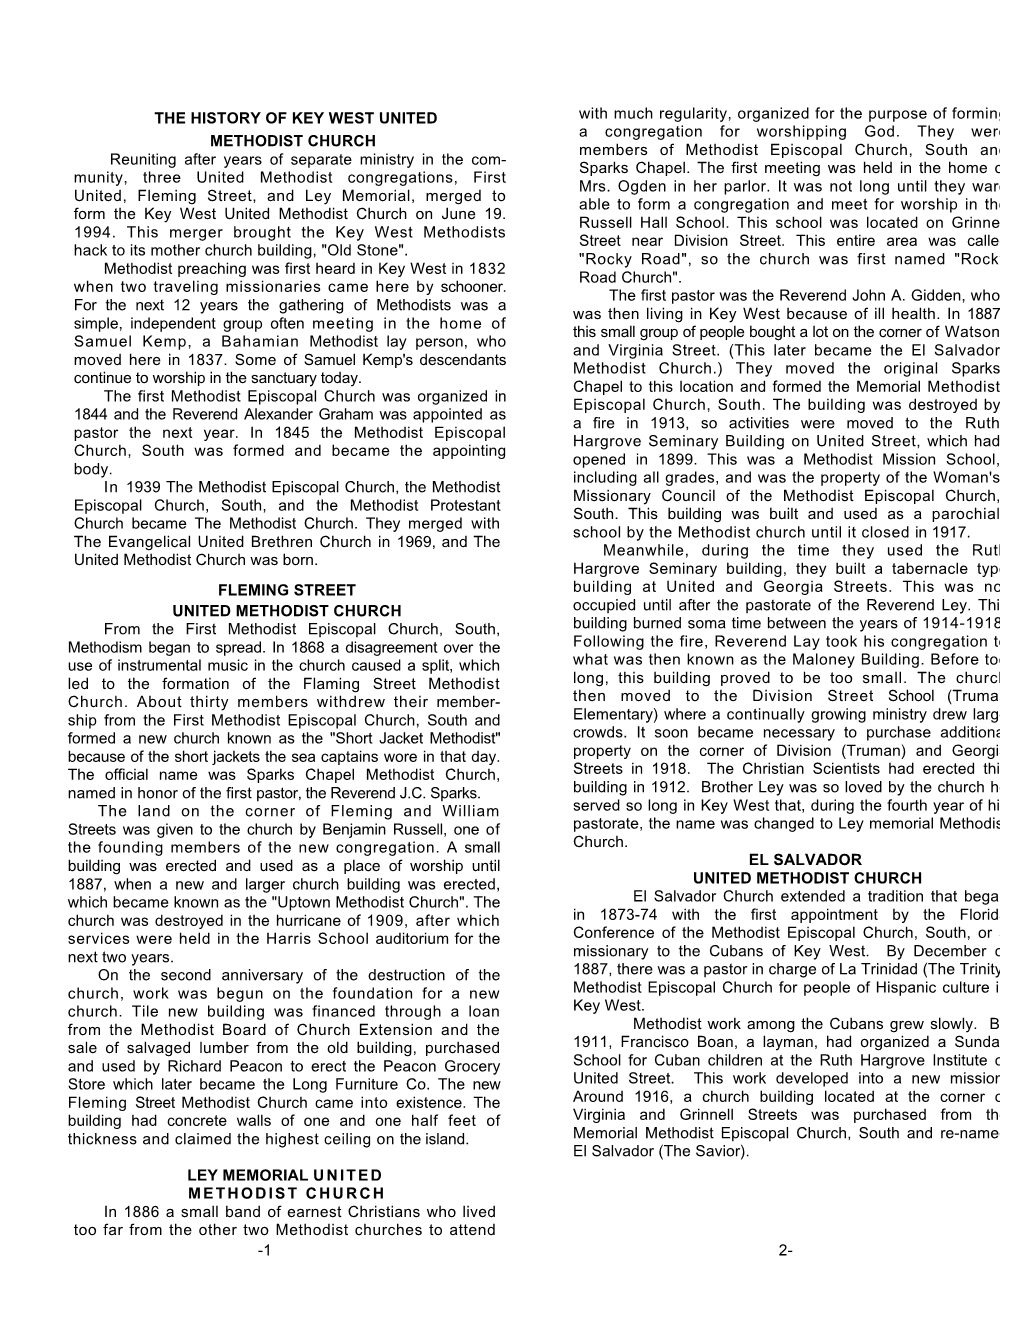 1 2- the History of Key West United Methodist Church